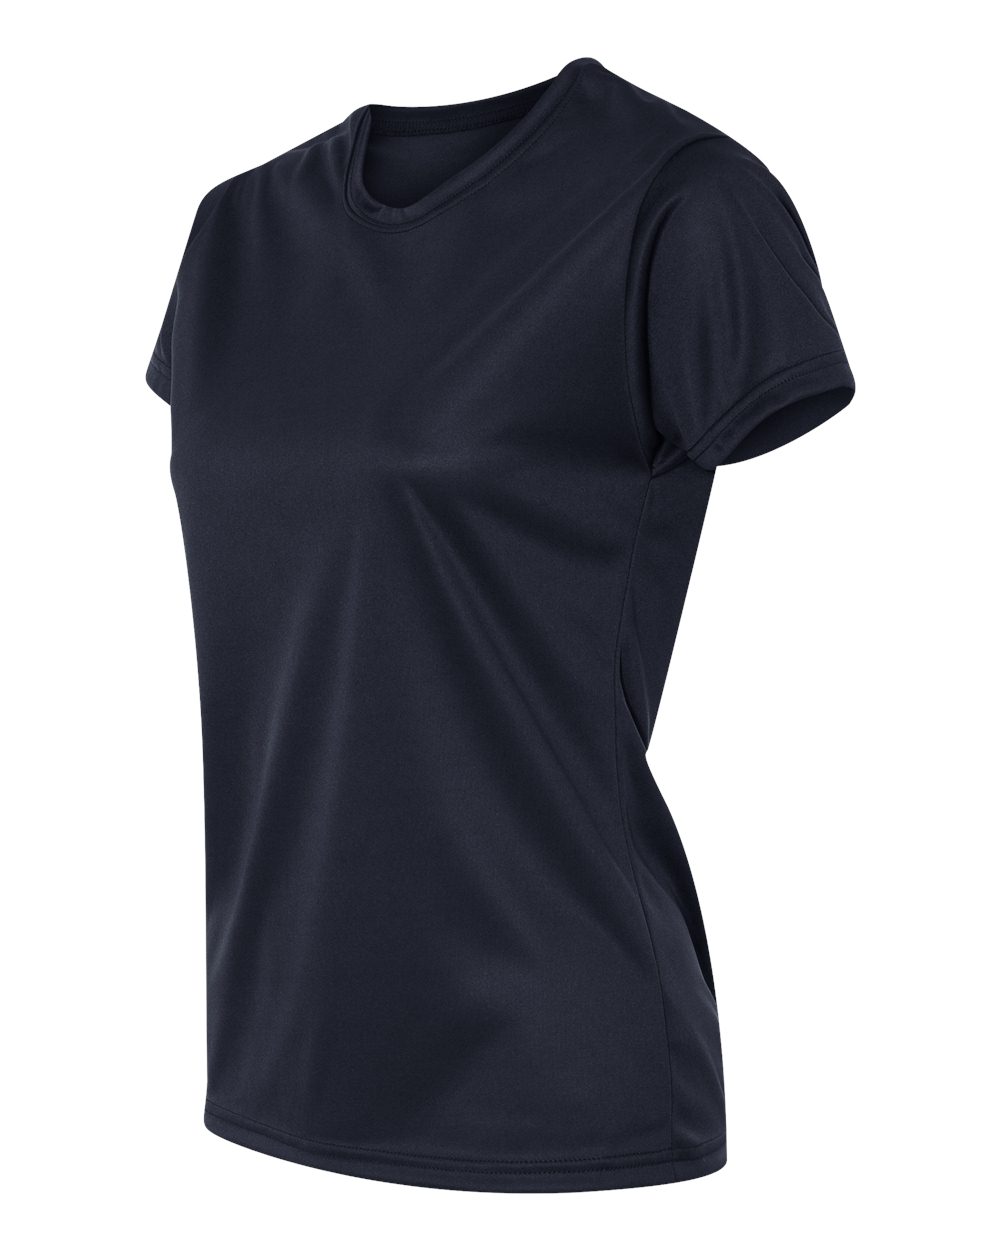 C2 Sport 5600 - Ladies' Short Sleeve Performance T-Shirt